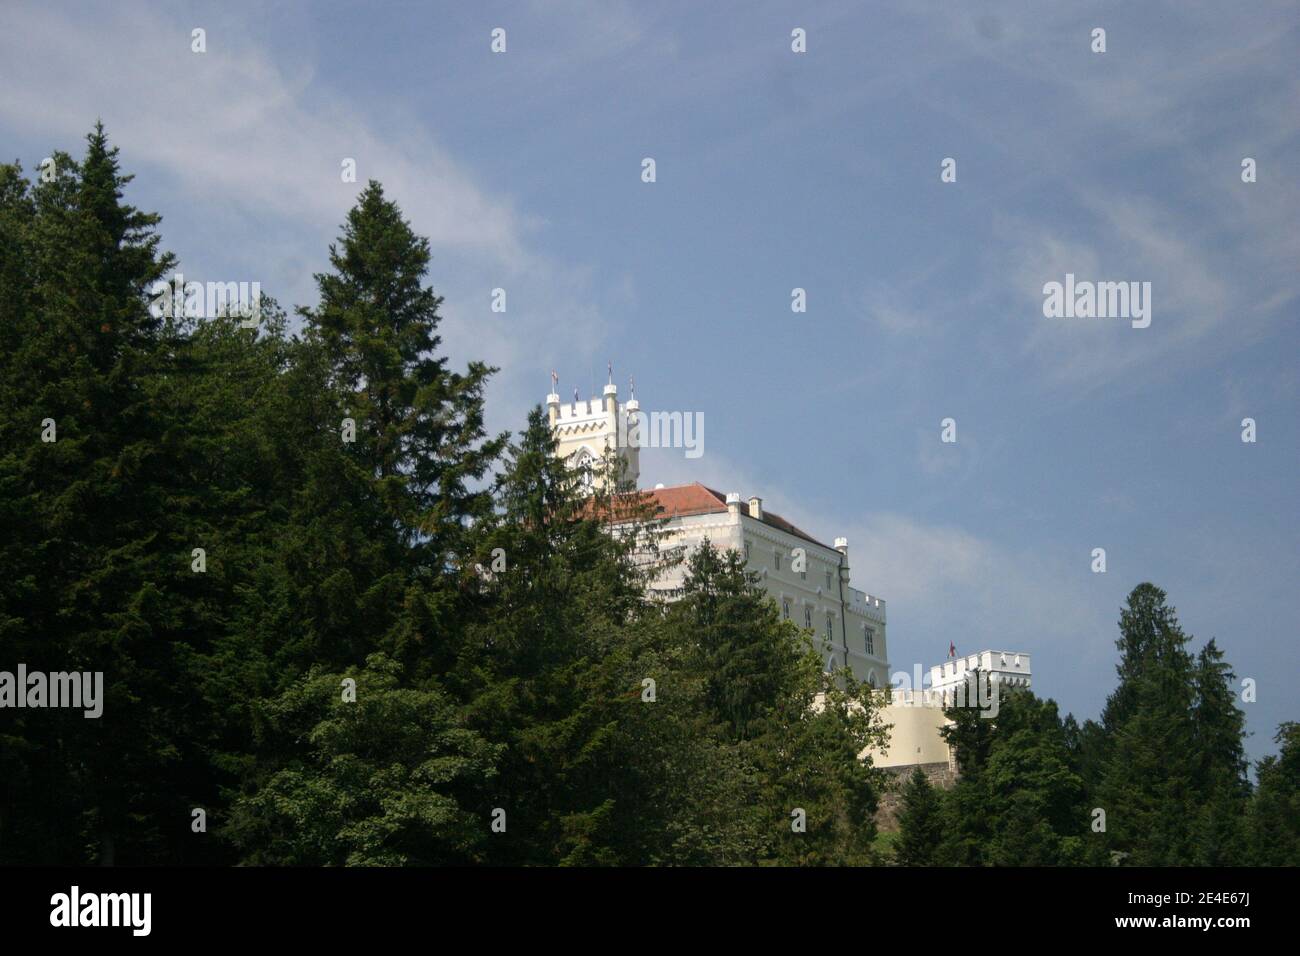 The Trakošćan castle behind pine trees on a hill Stock Photo